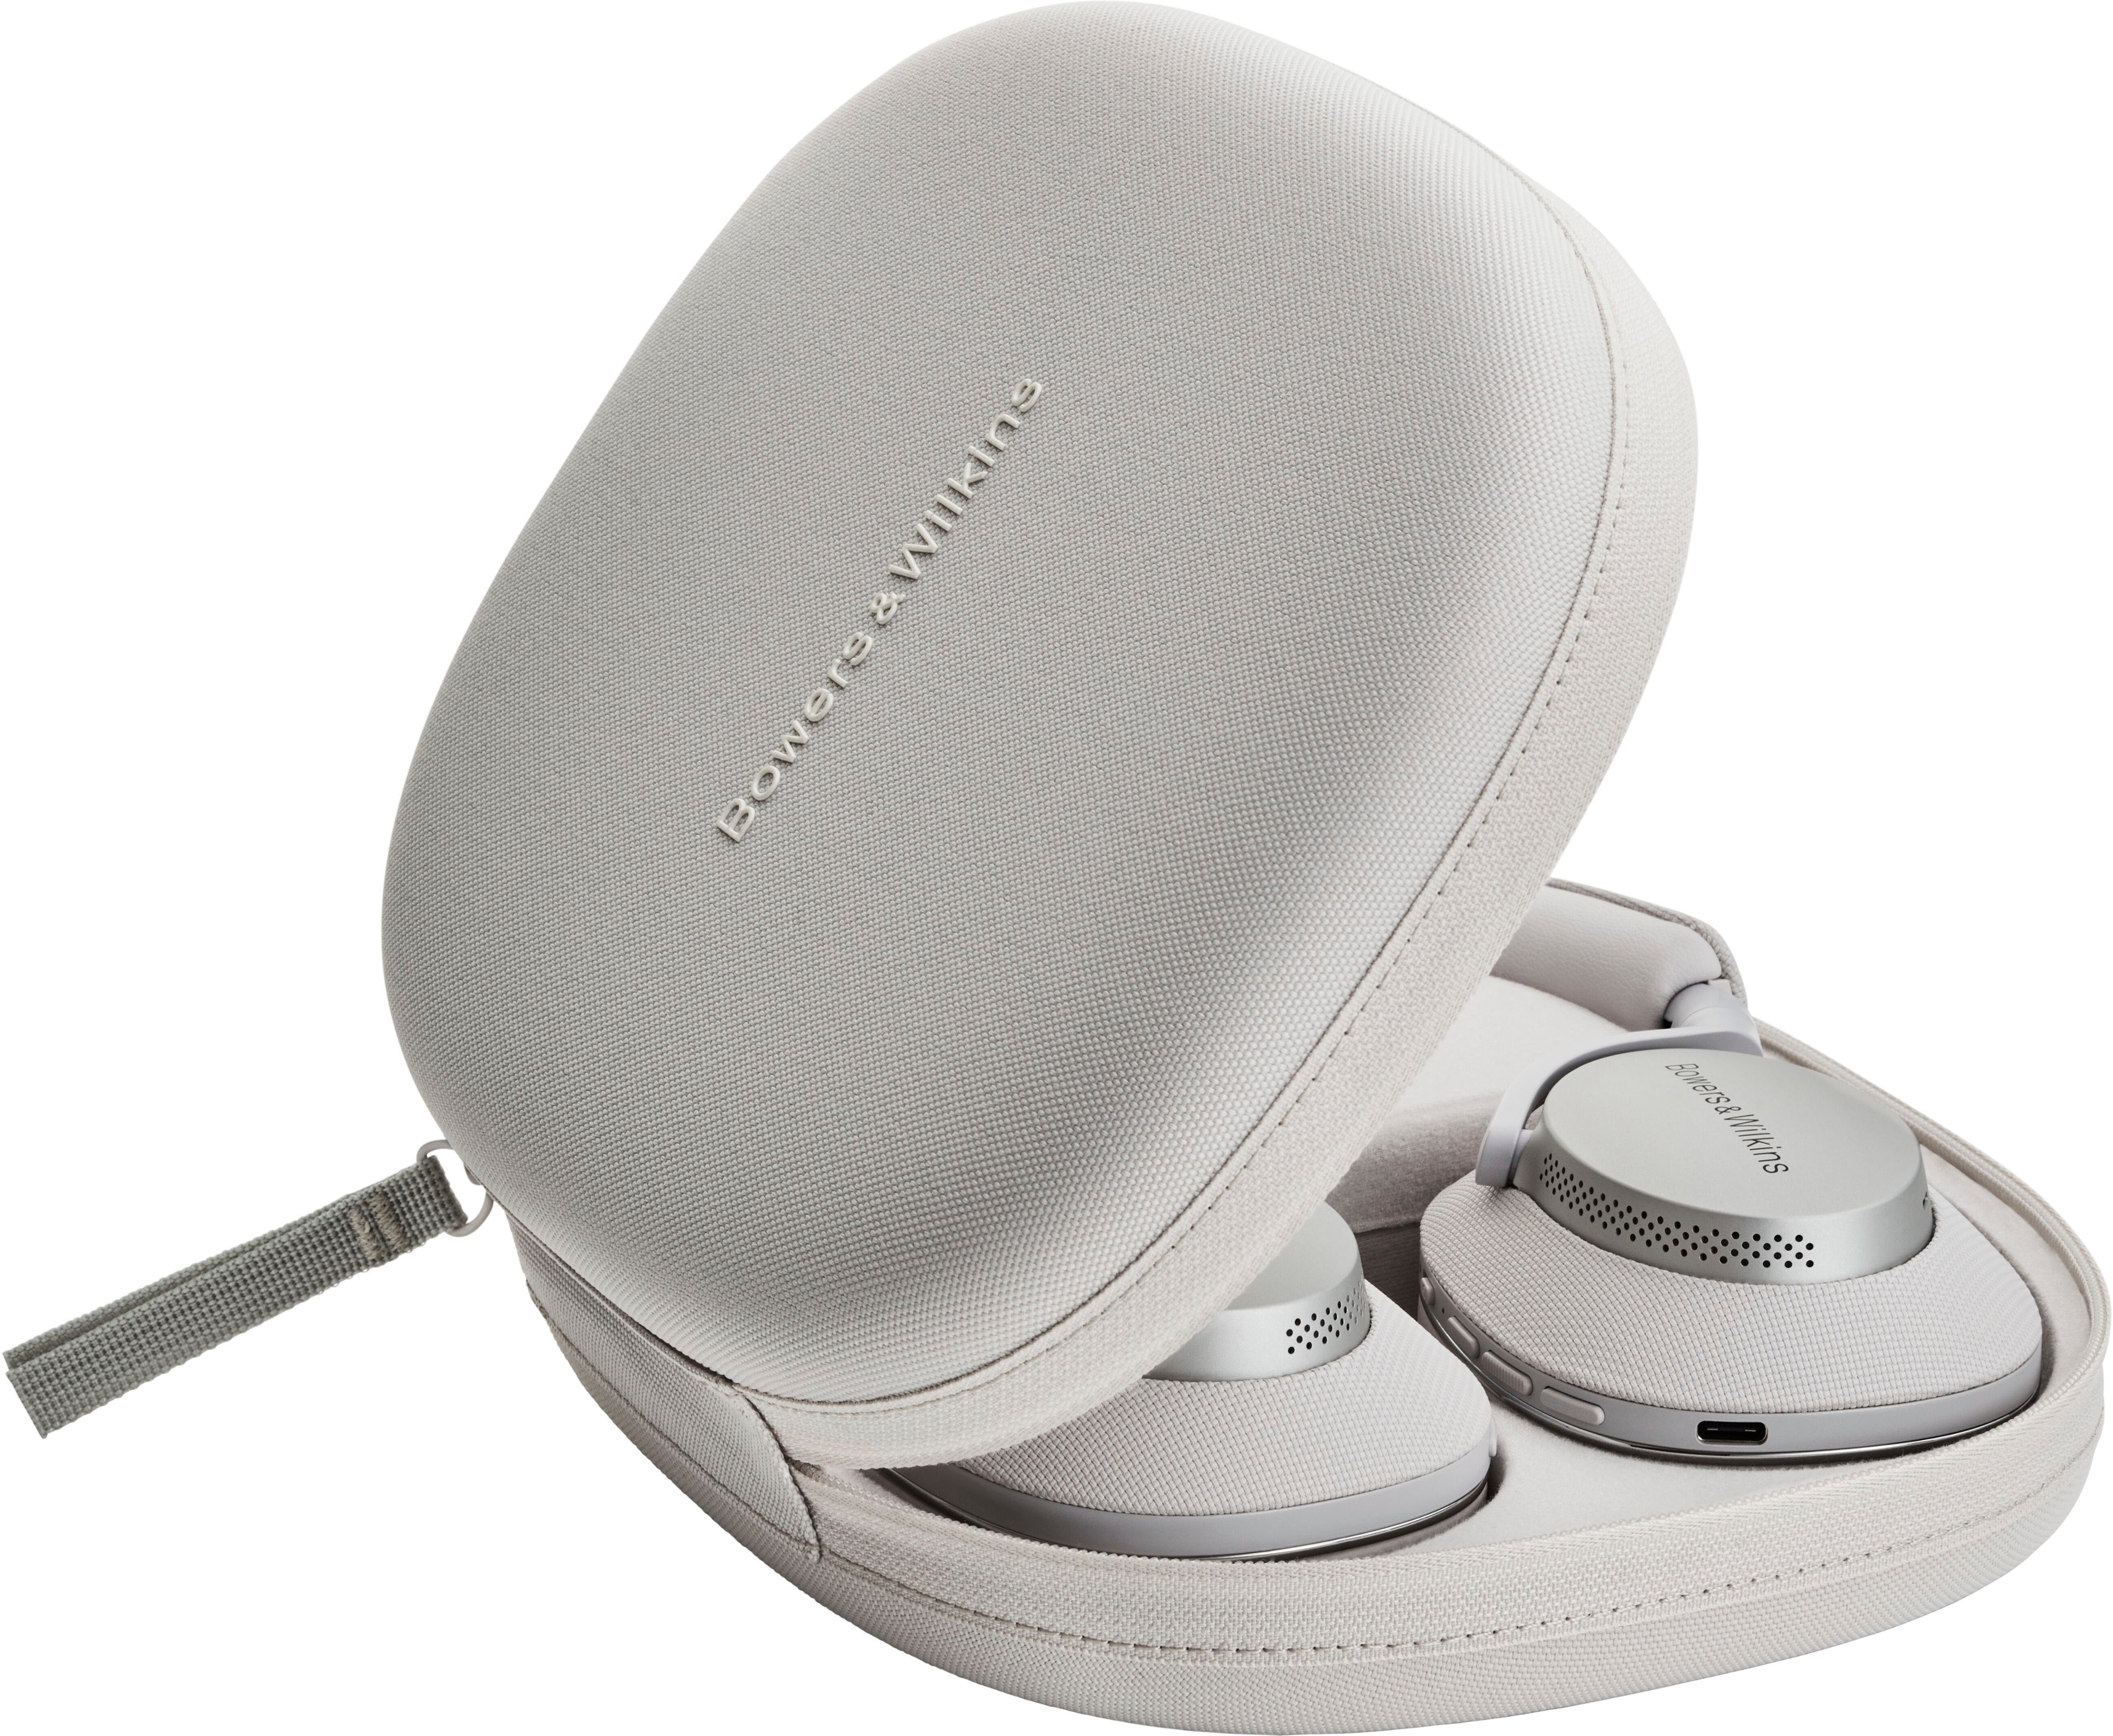 Tempting Premium Headphones: Bowers & Wilkins Px7 S2 Review